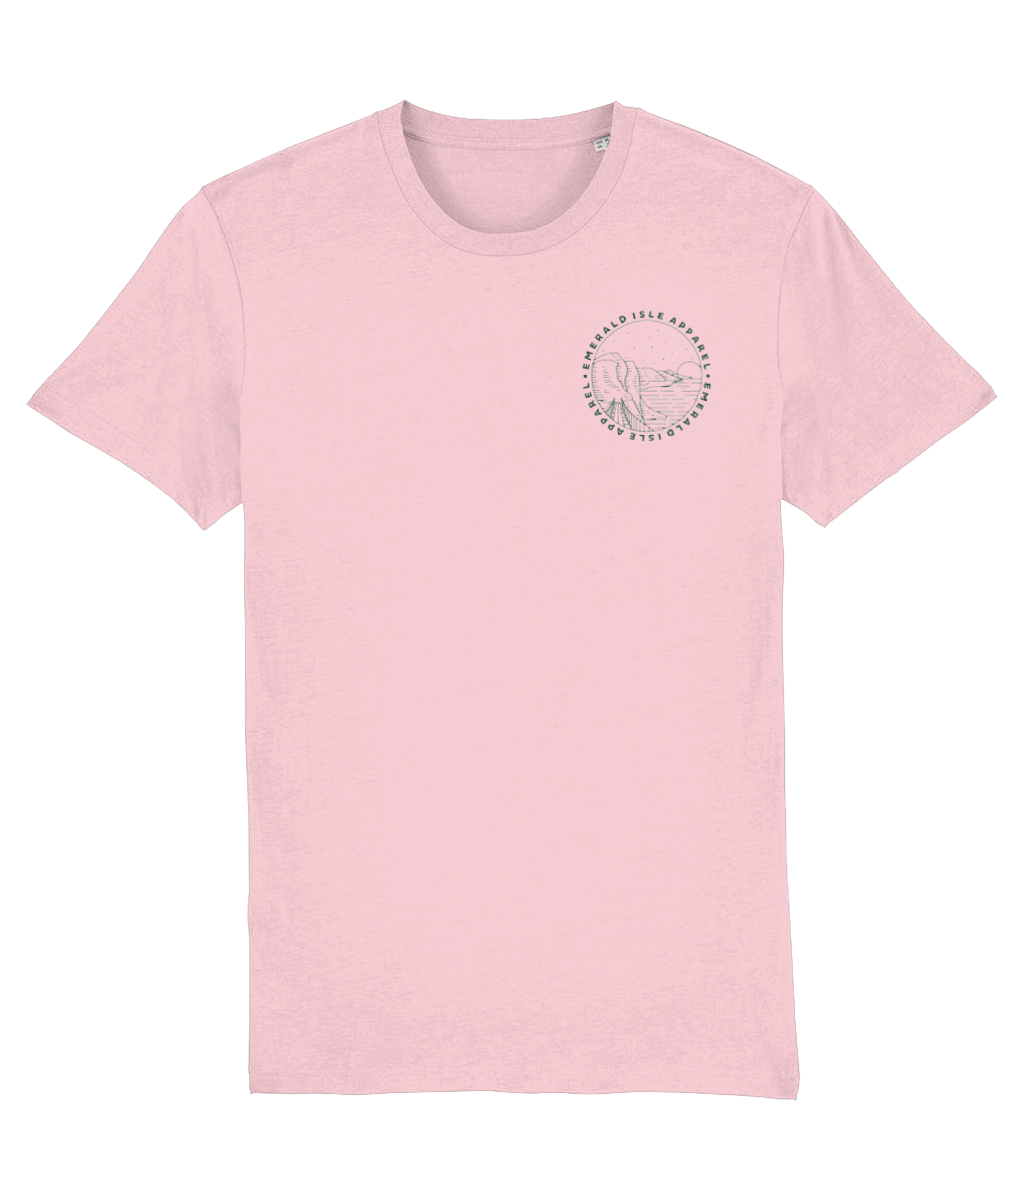 Cotton Pink Silent Valley Unisex T-Shirt